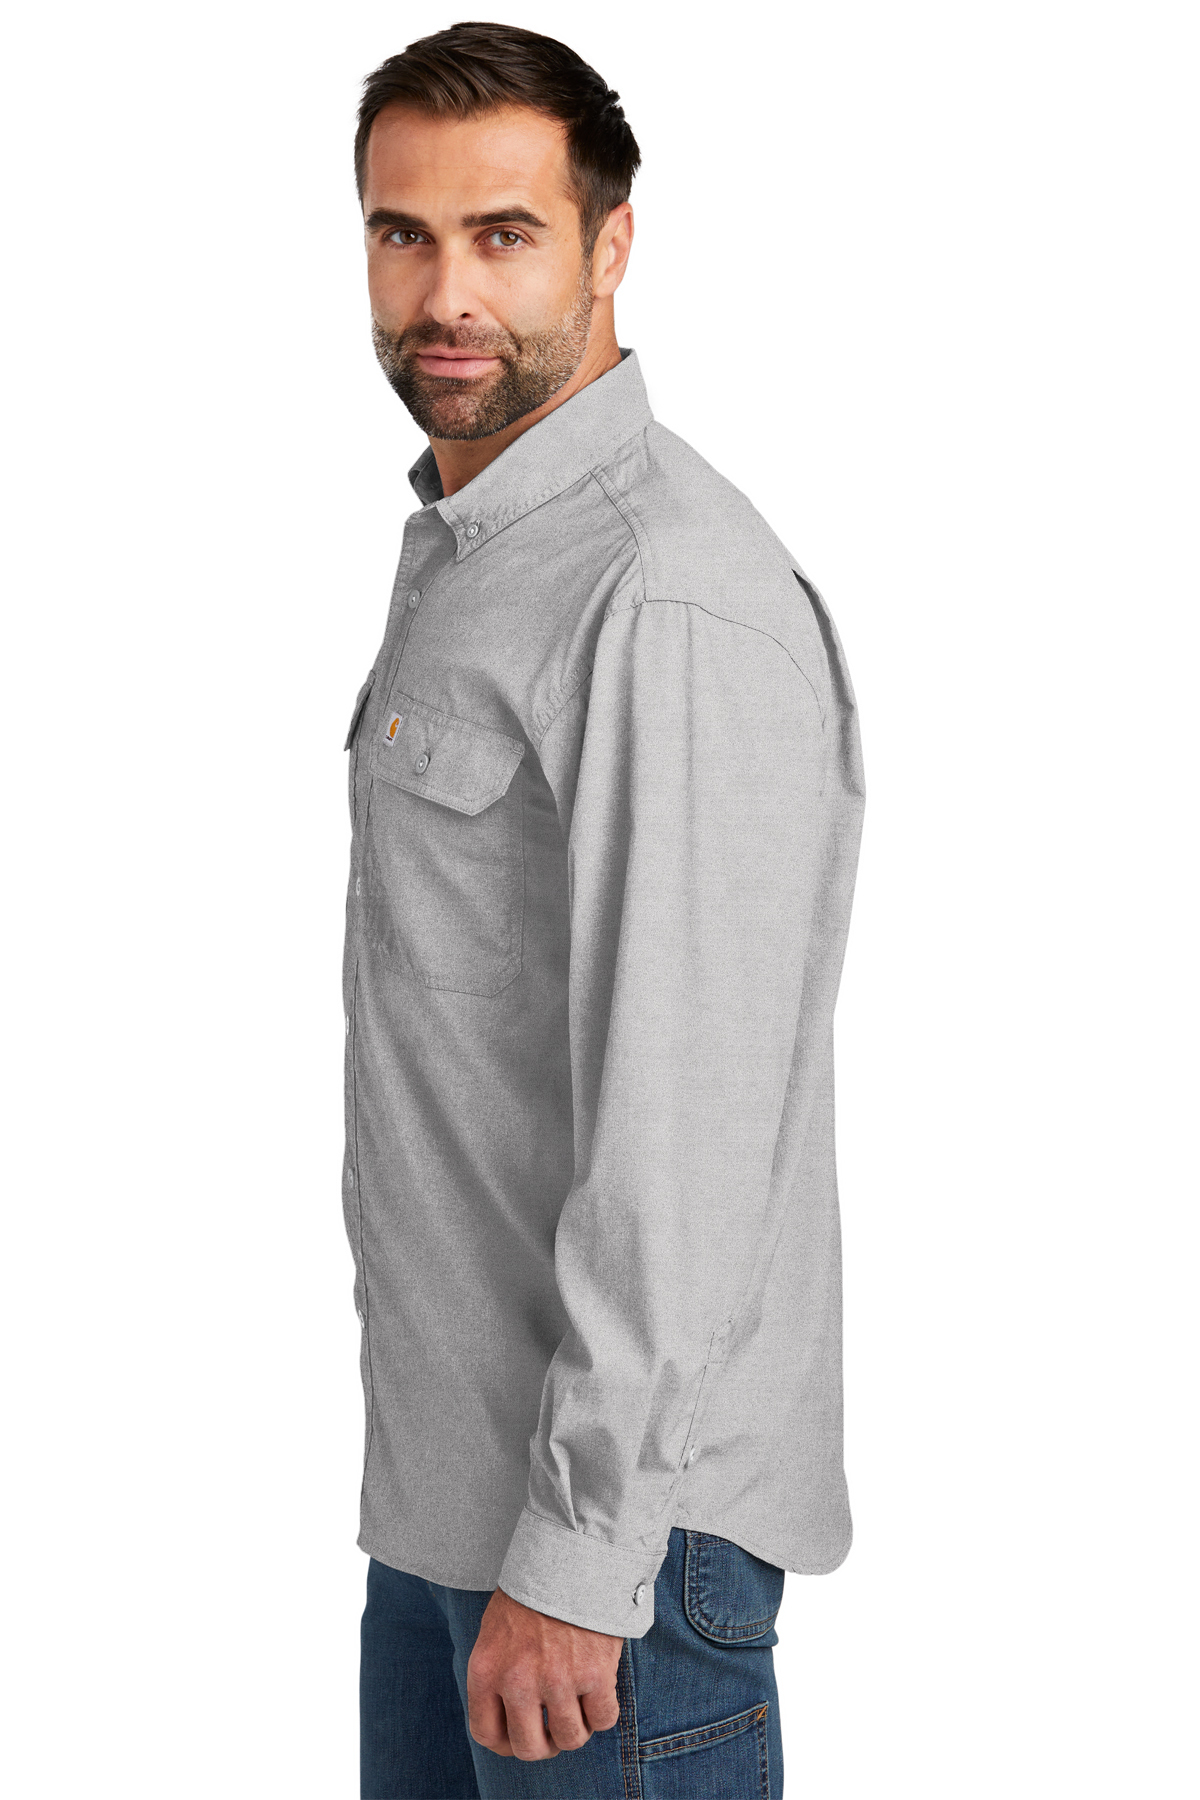 Carhartt Force 1/4-Zip Long Sleeve T-Shirt, Product